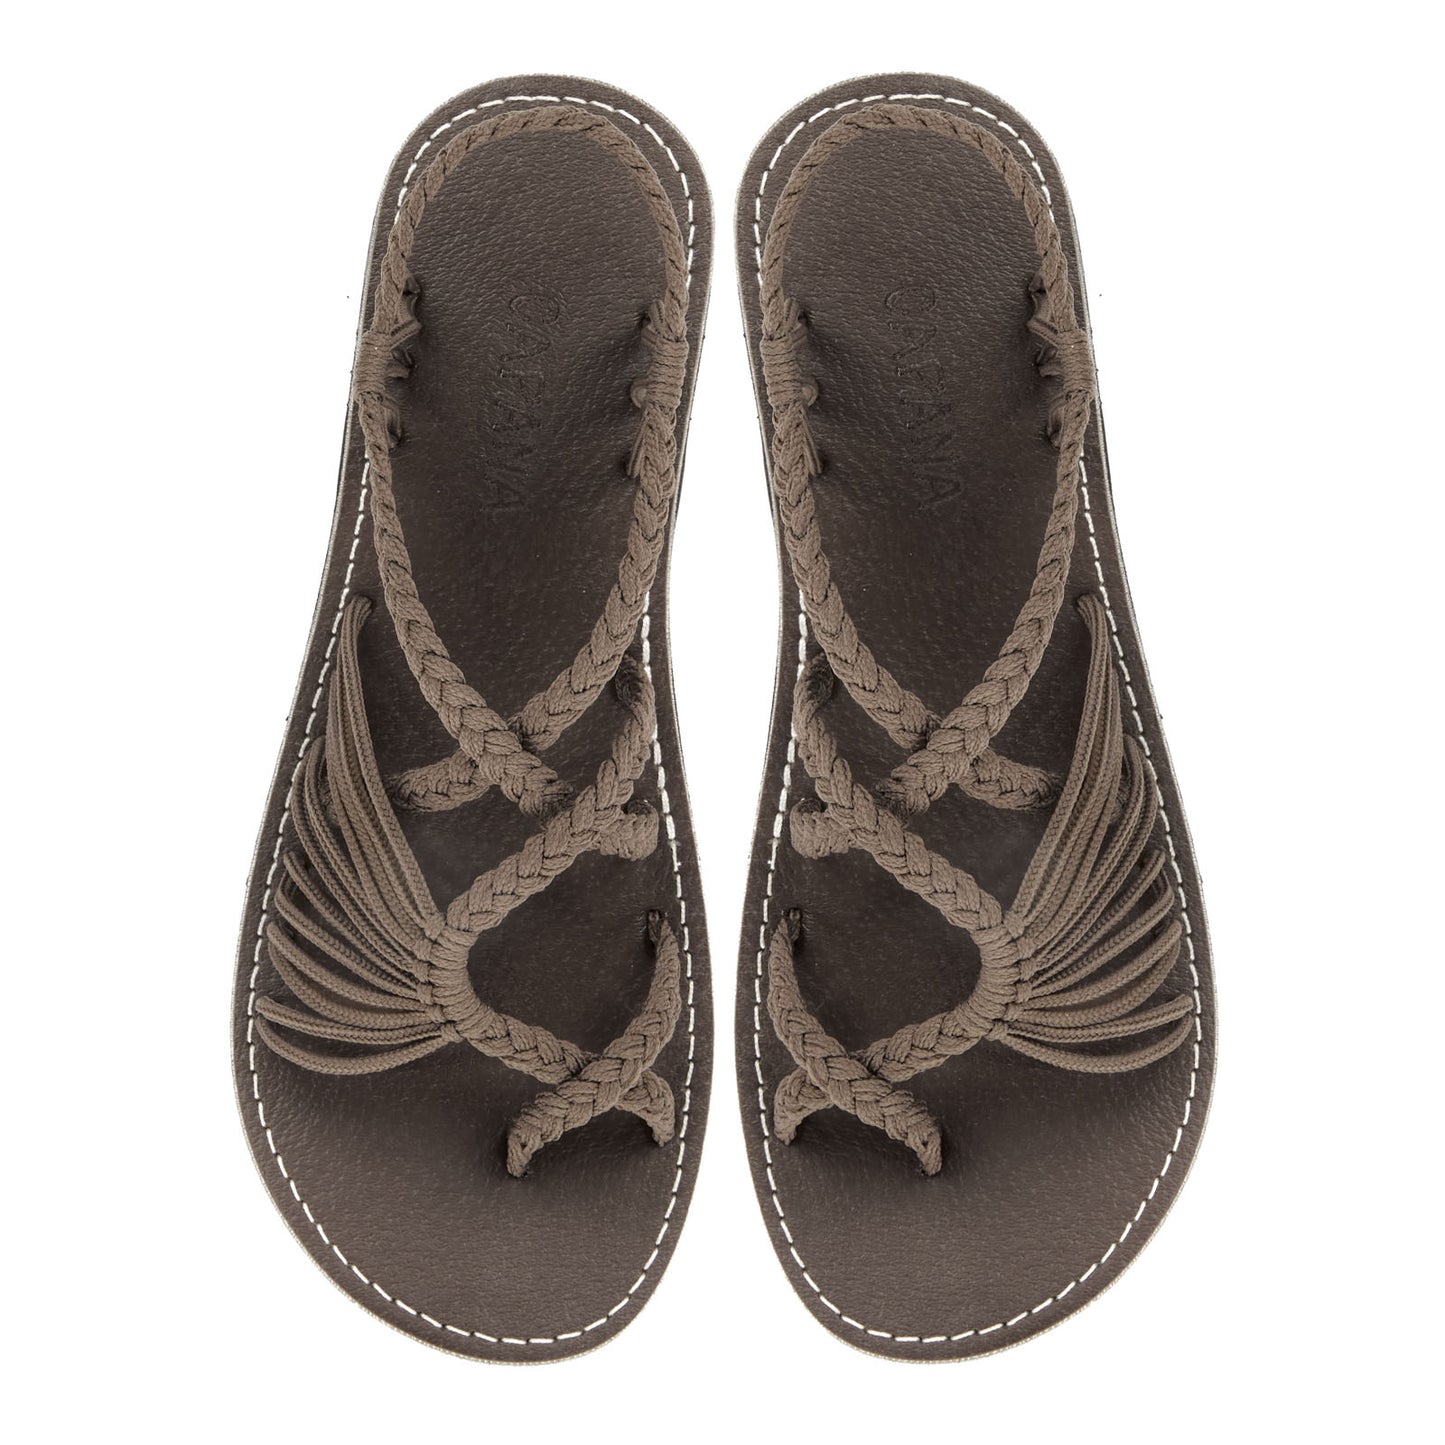 Banyan Taupe Rope Sandals Dark Gray Crisscross design Flat sandals for women